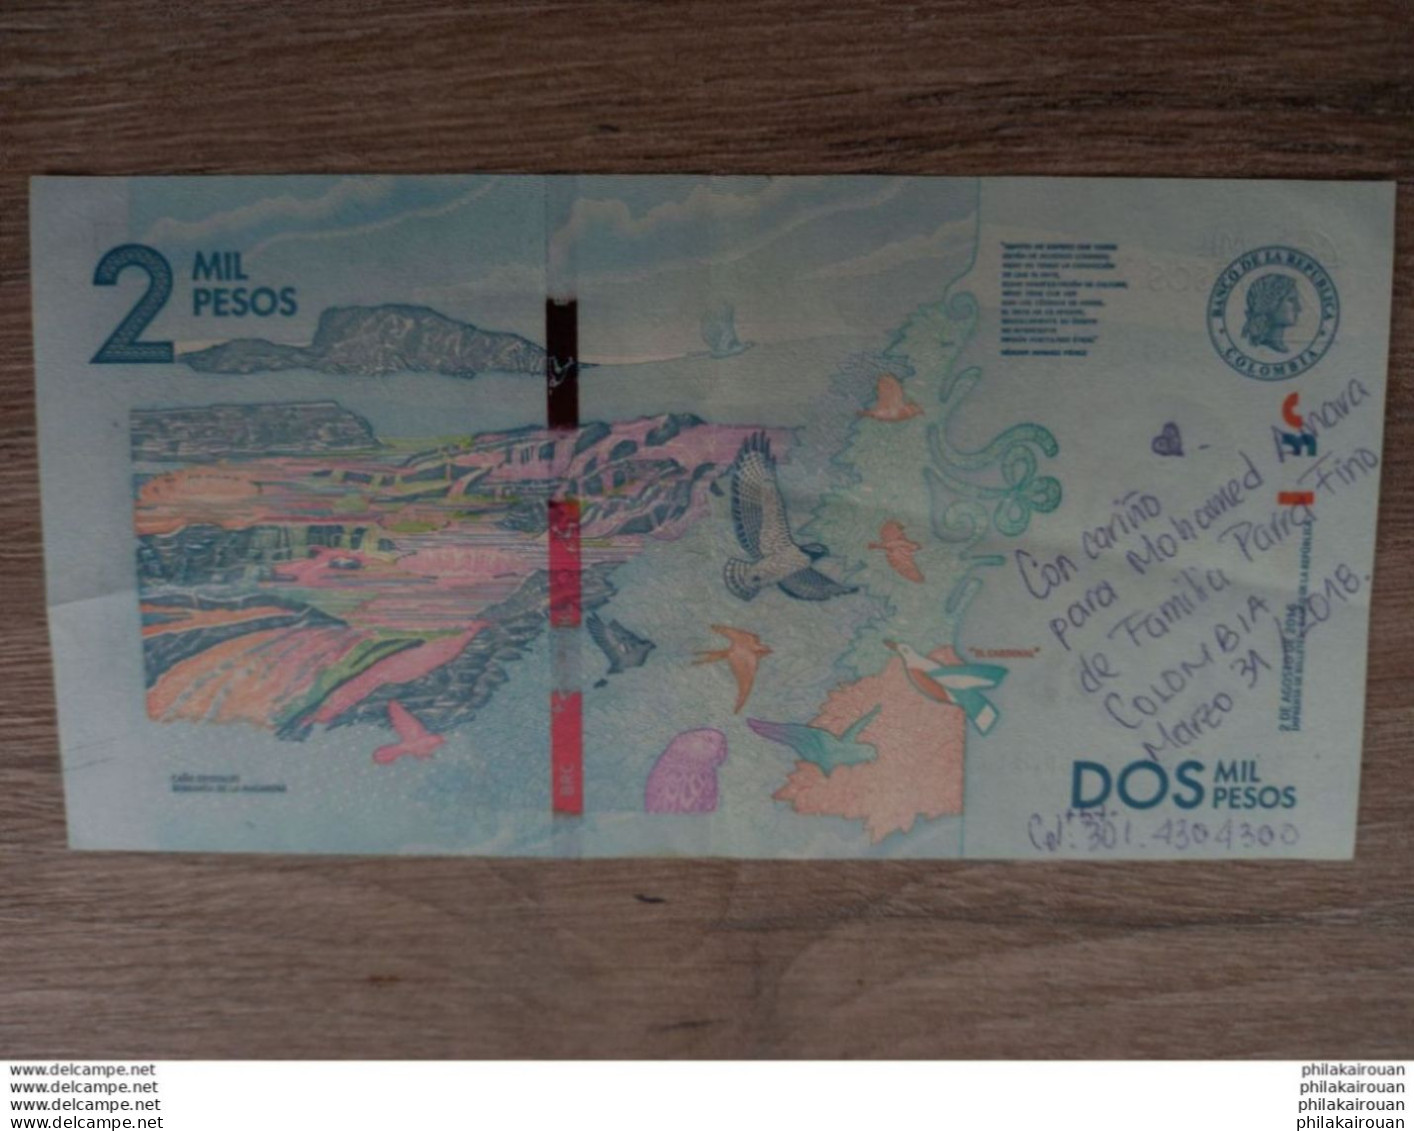 COLOMBIA P458b 2000 Pesos 2.8.2016 .avec Ses Inscriptions Au Stylo - Kolumbien